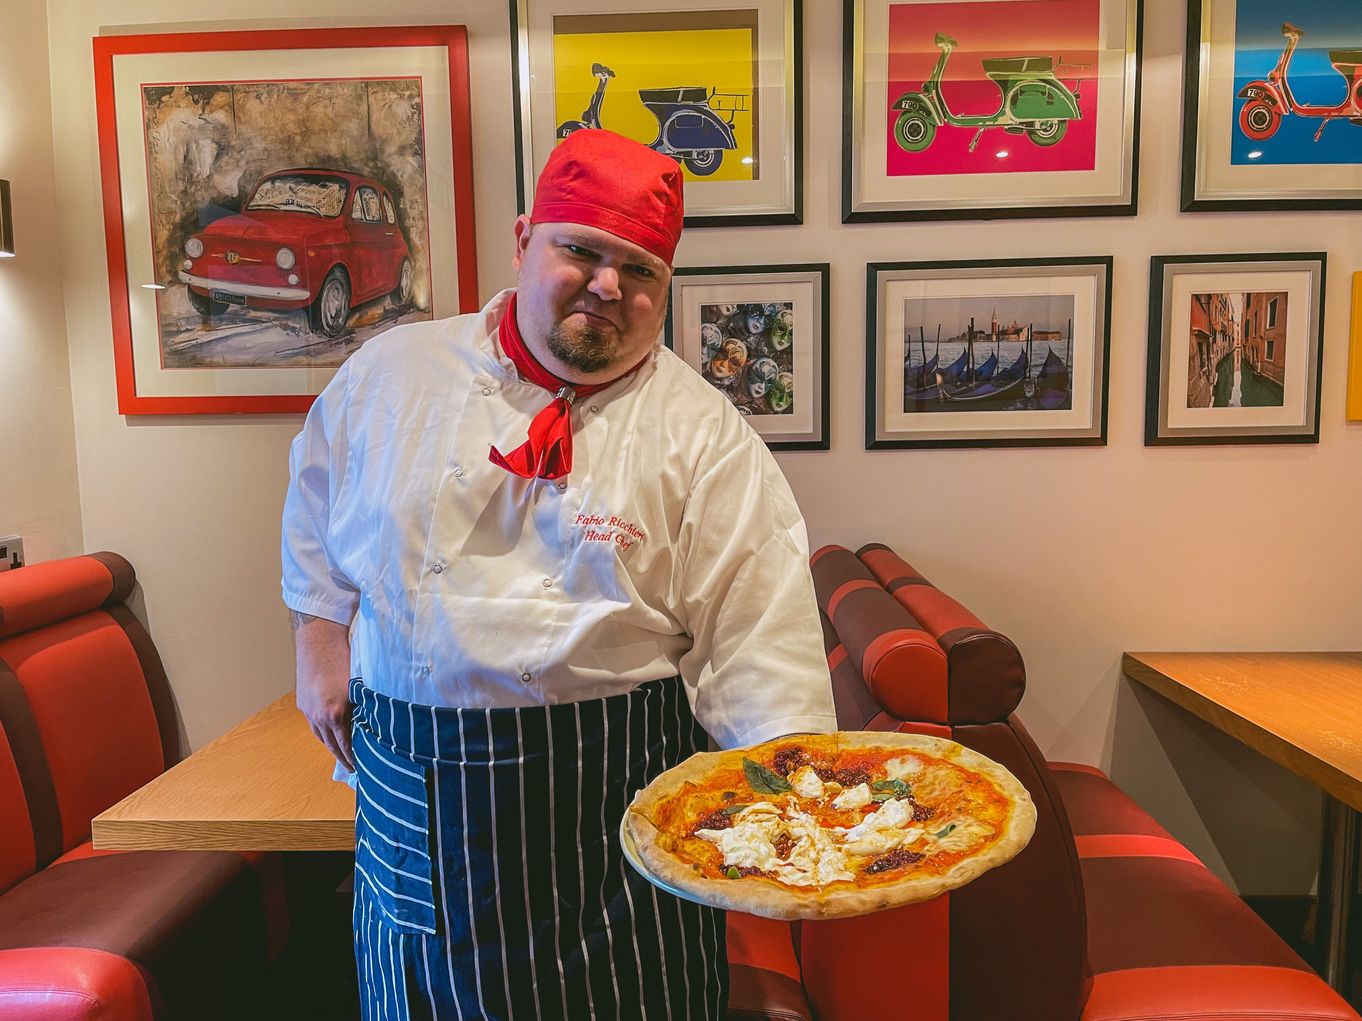 Head Chef Fabio Ricchieri showcasing the winning pizza design